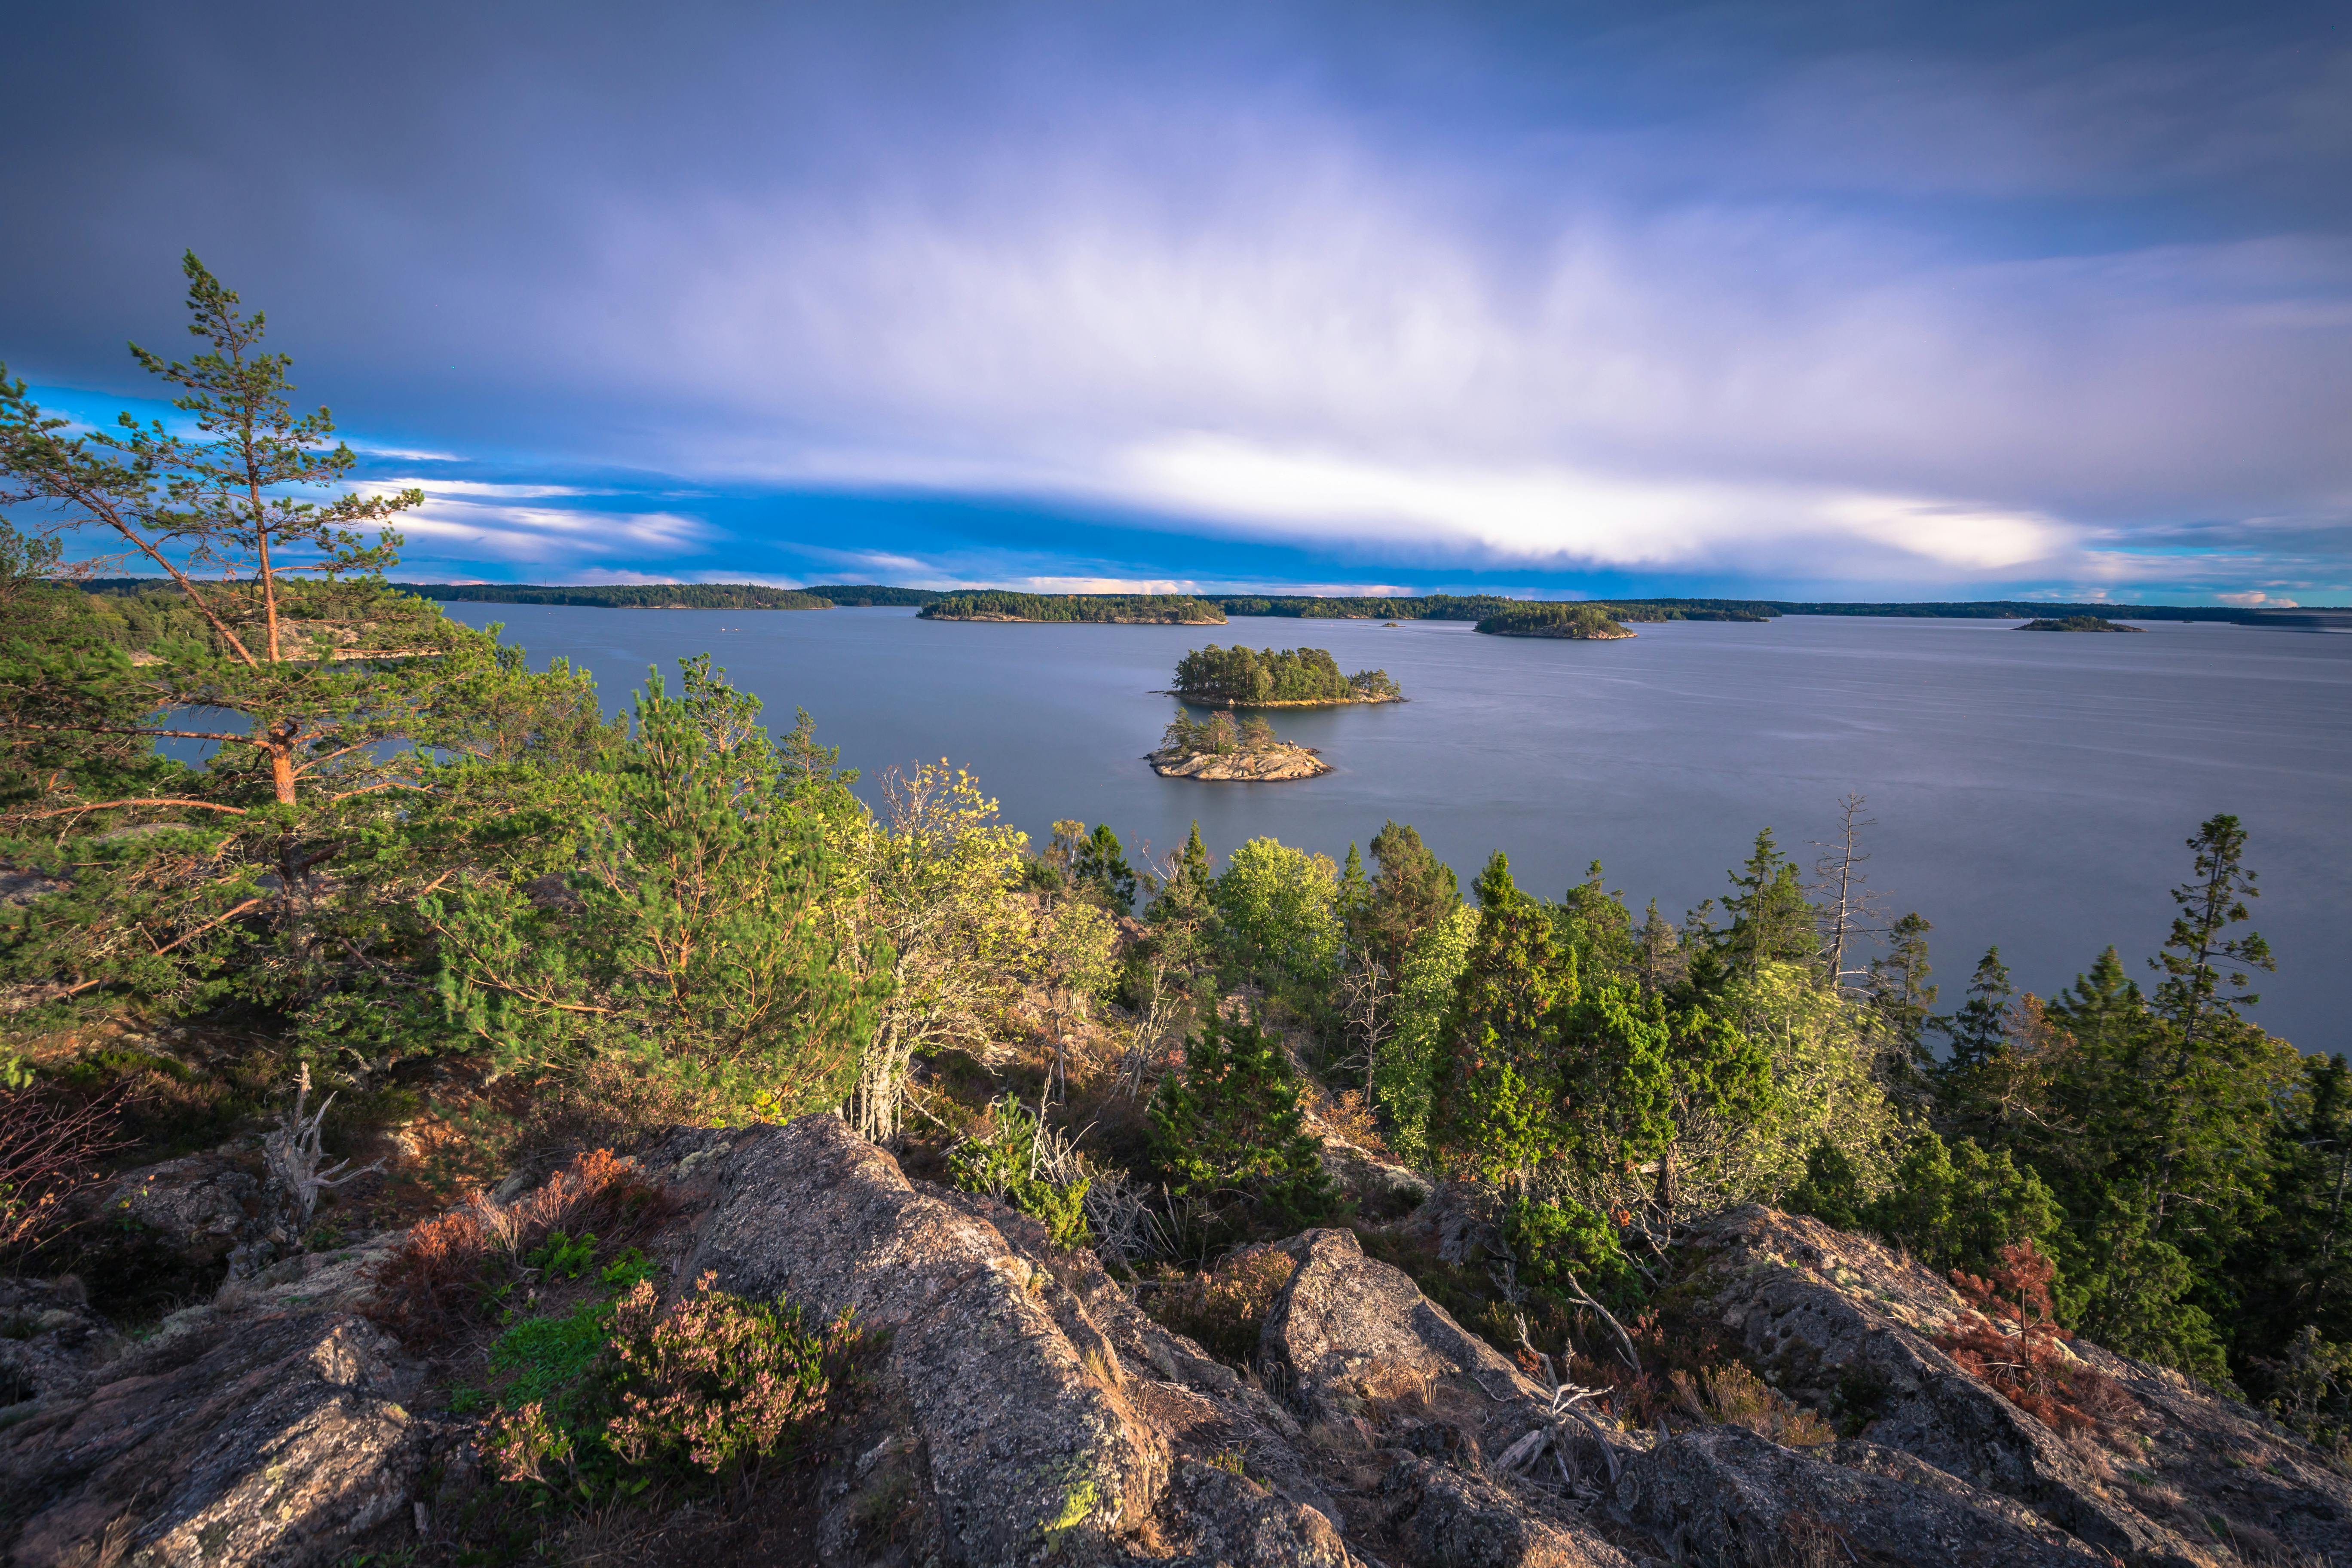 Vandring en hel dag i svensk natur